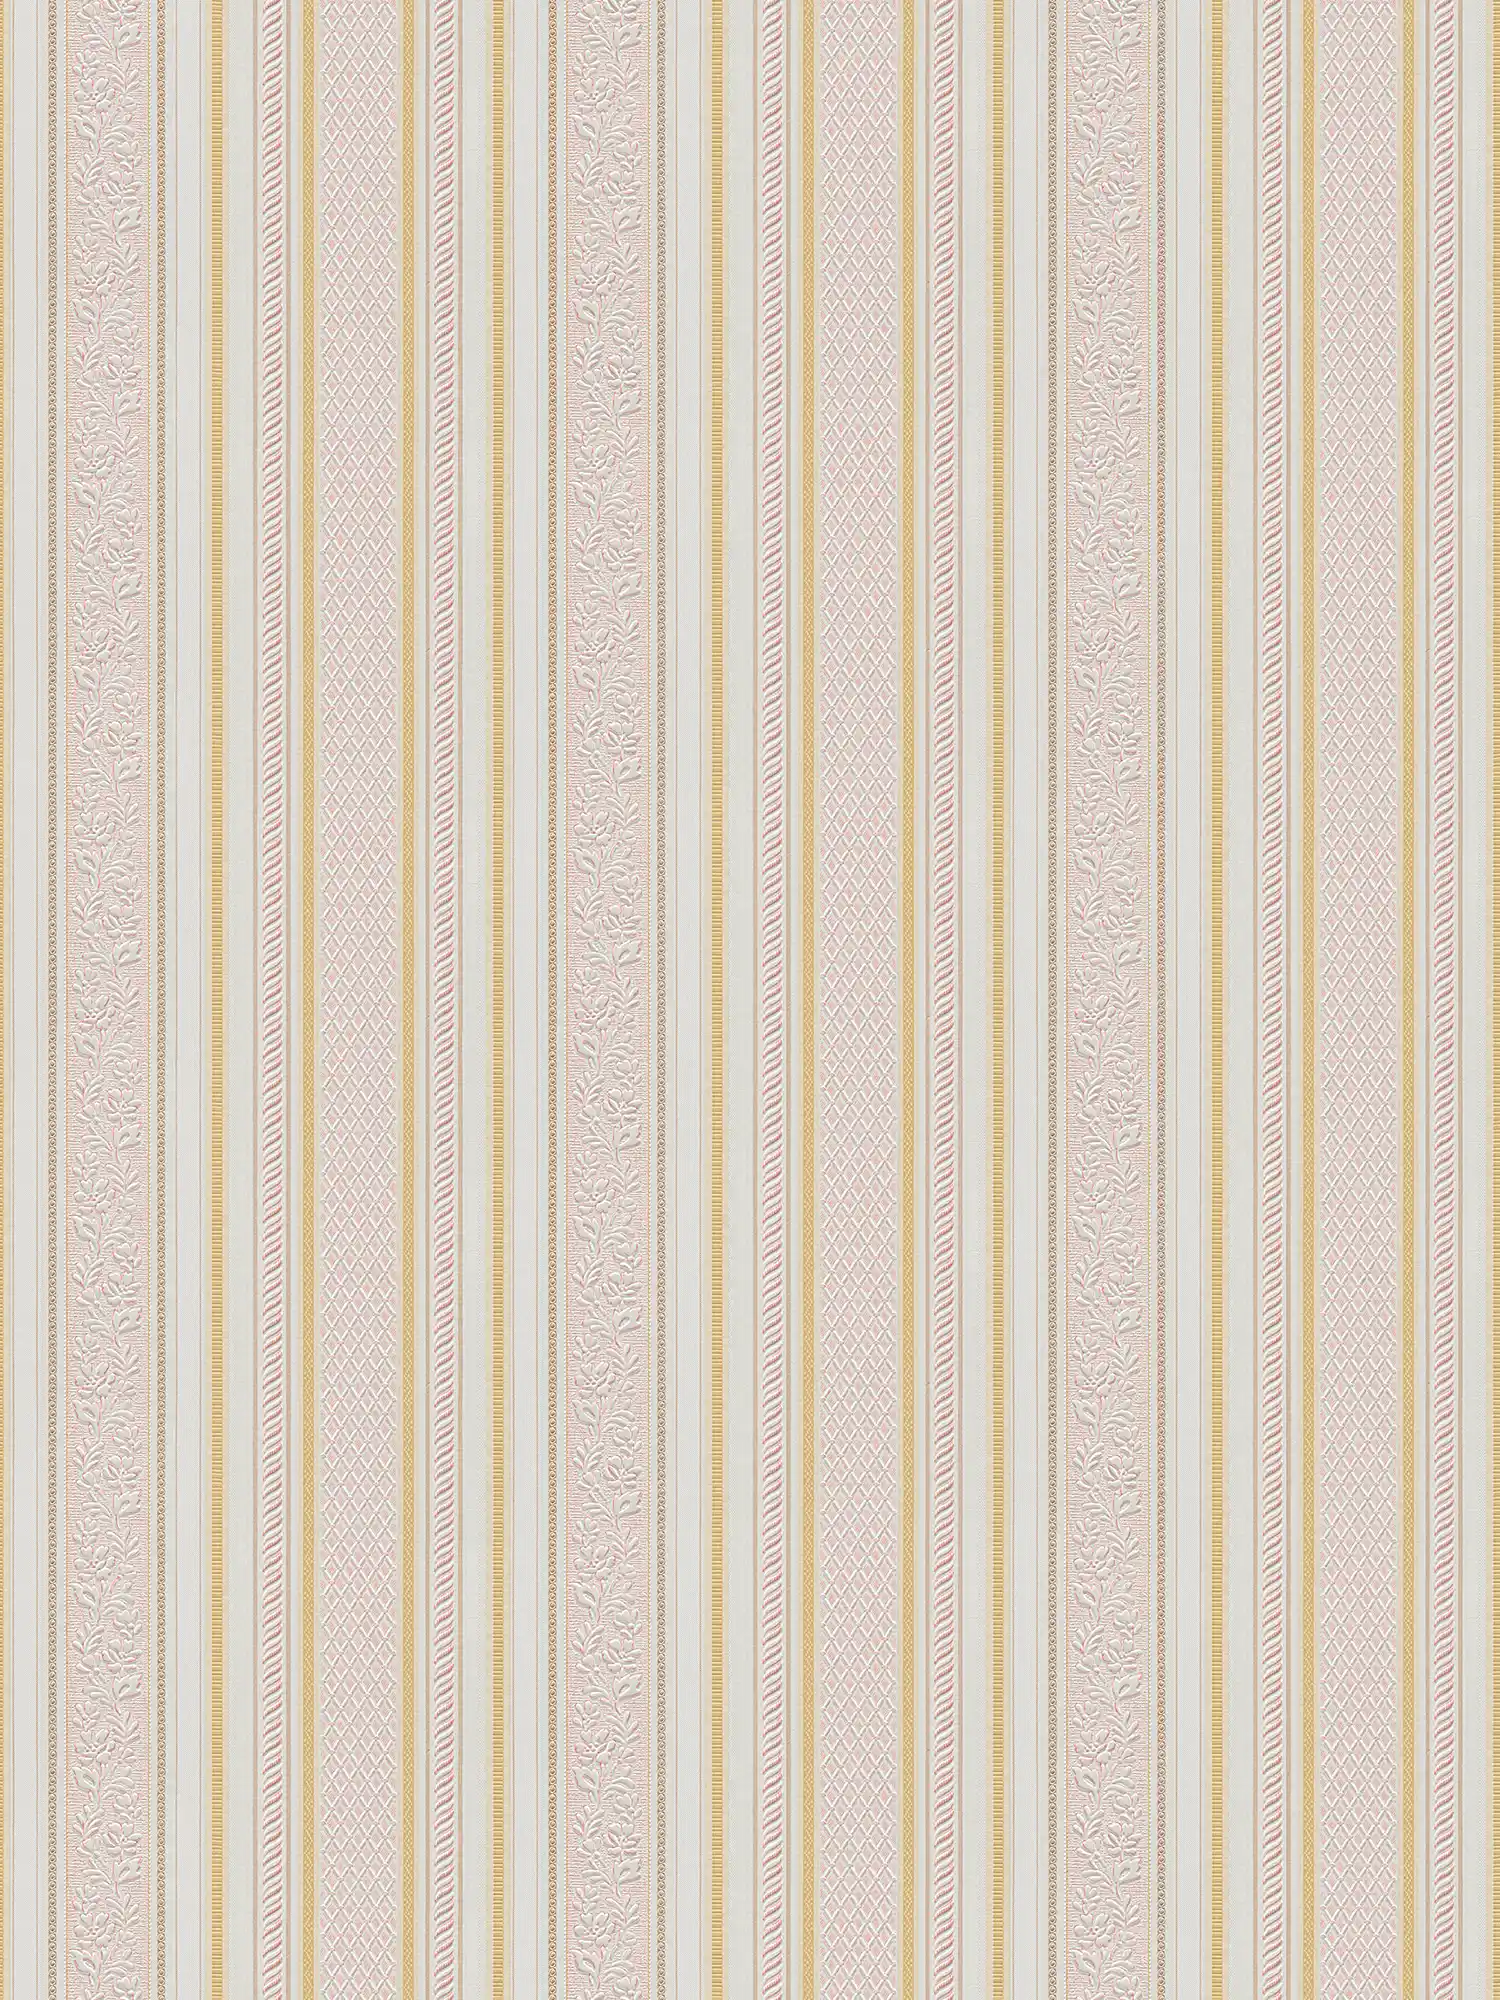 Vintage wallpaper renaissance stripe pattern - metallic
